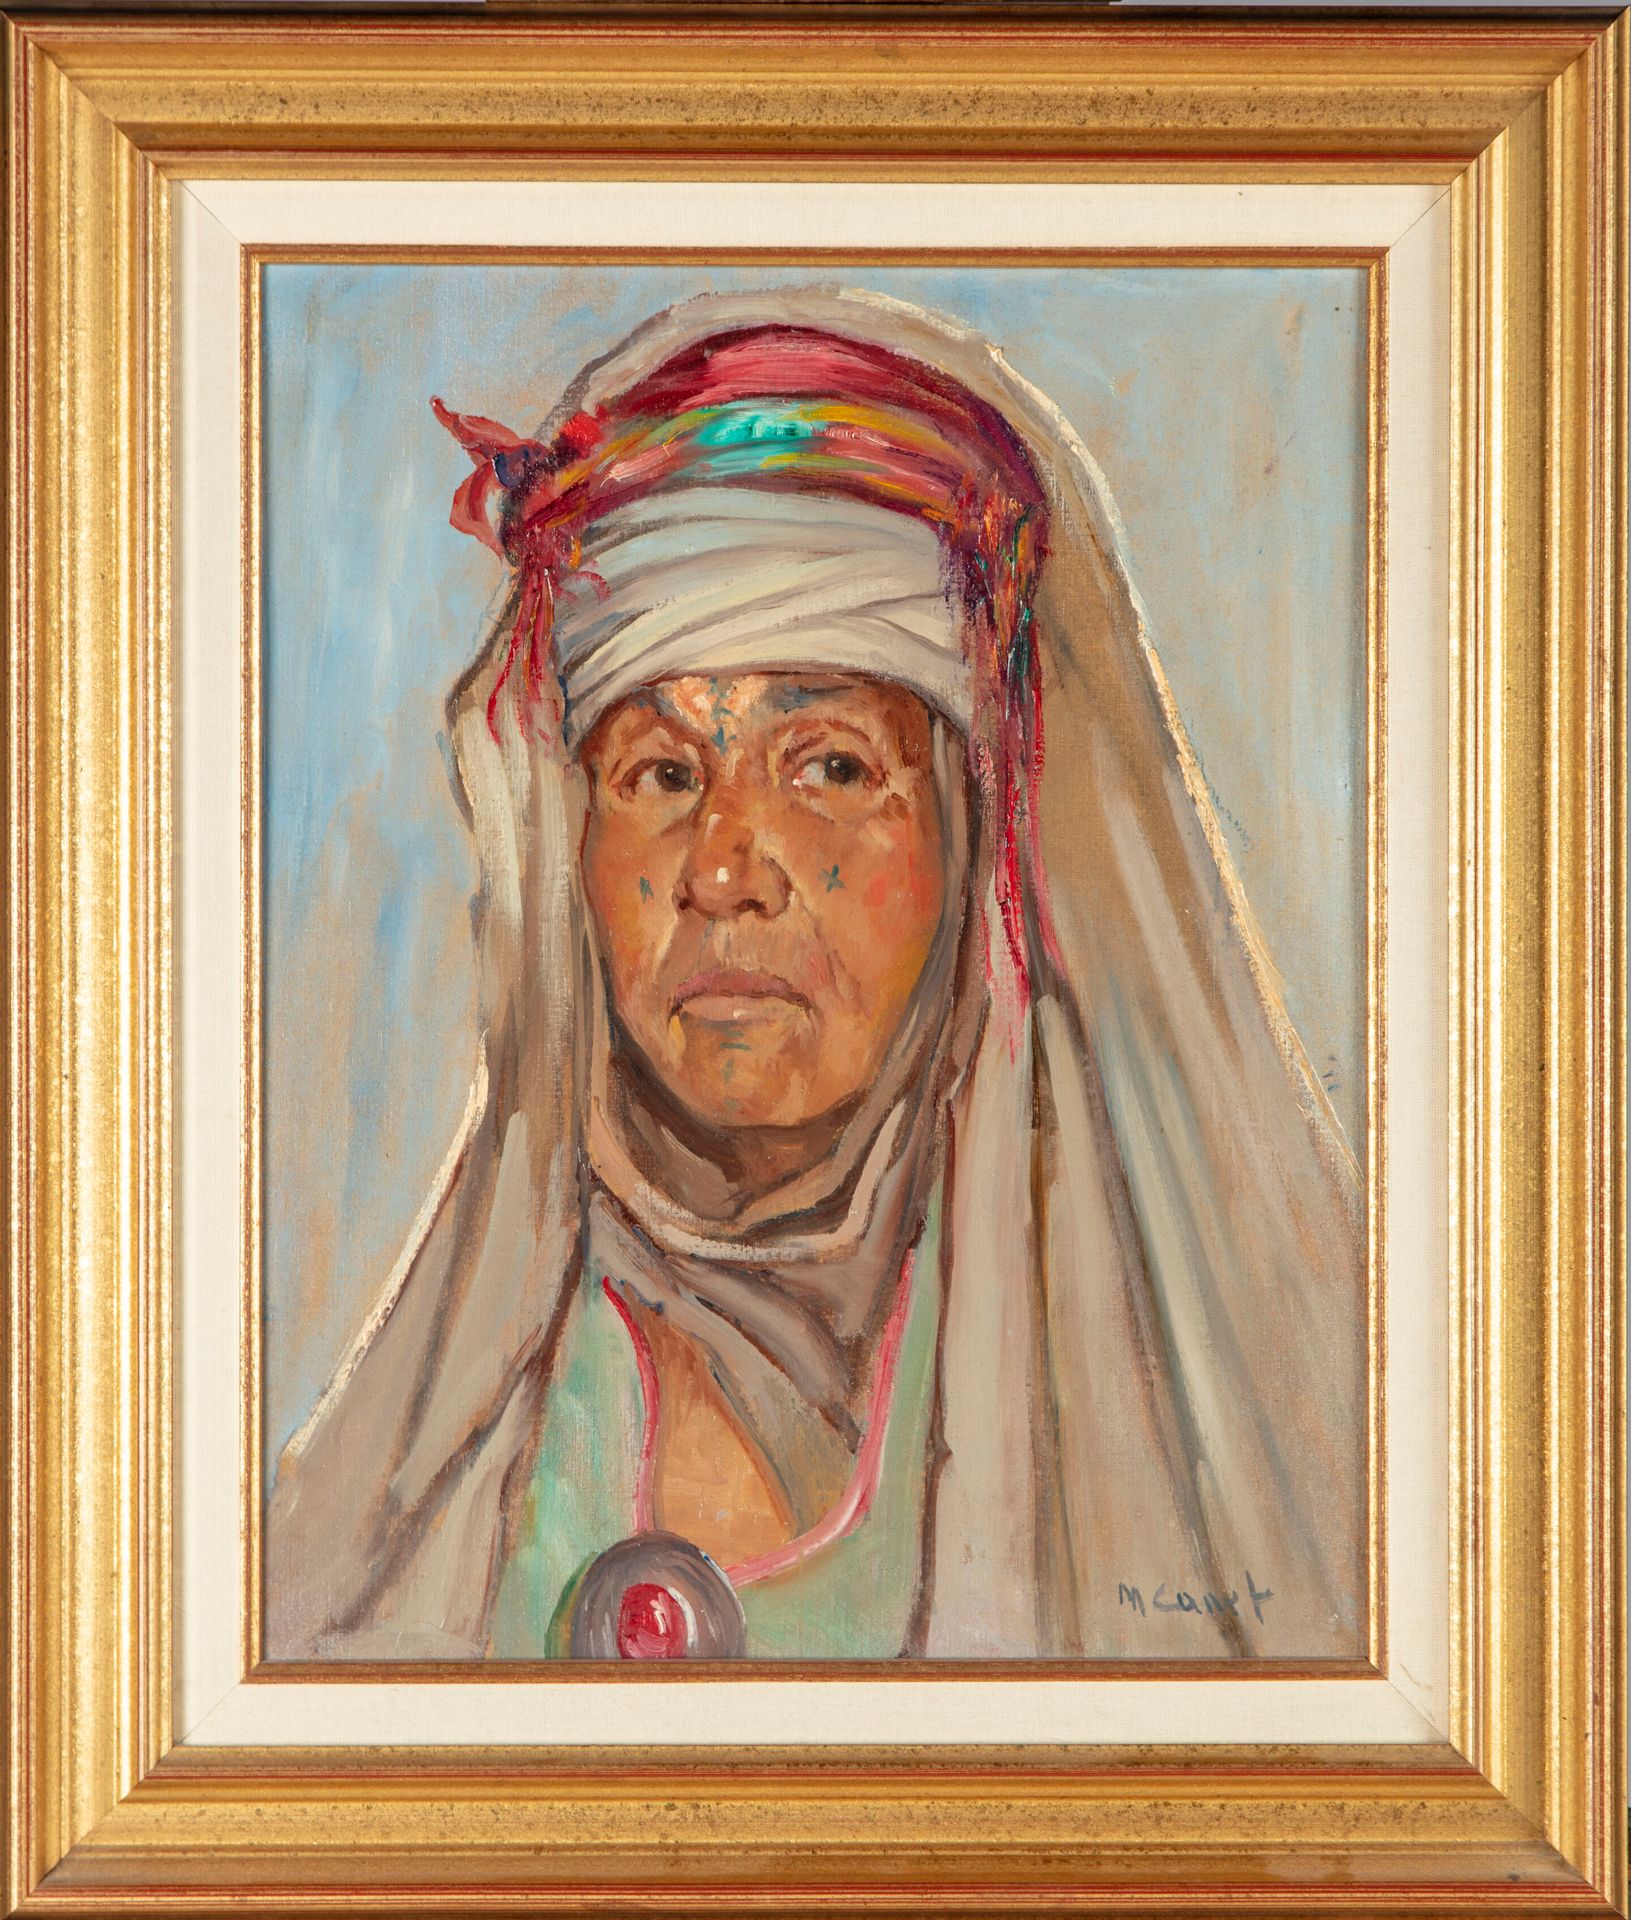 MARCEL CANET Marcel CANET (1875-1959)

Porträt einer Berberfrau

Öl auf Leinwand&hellip;